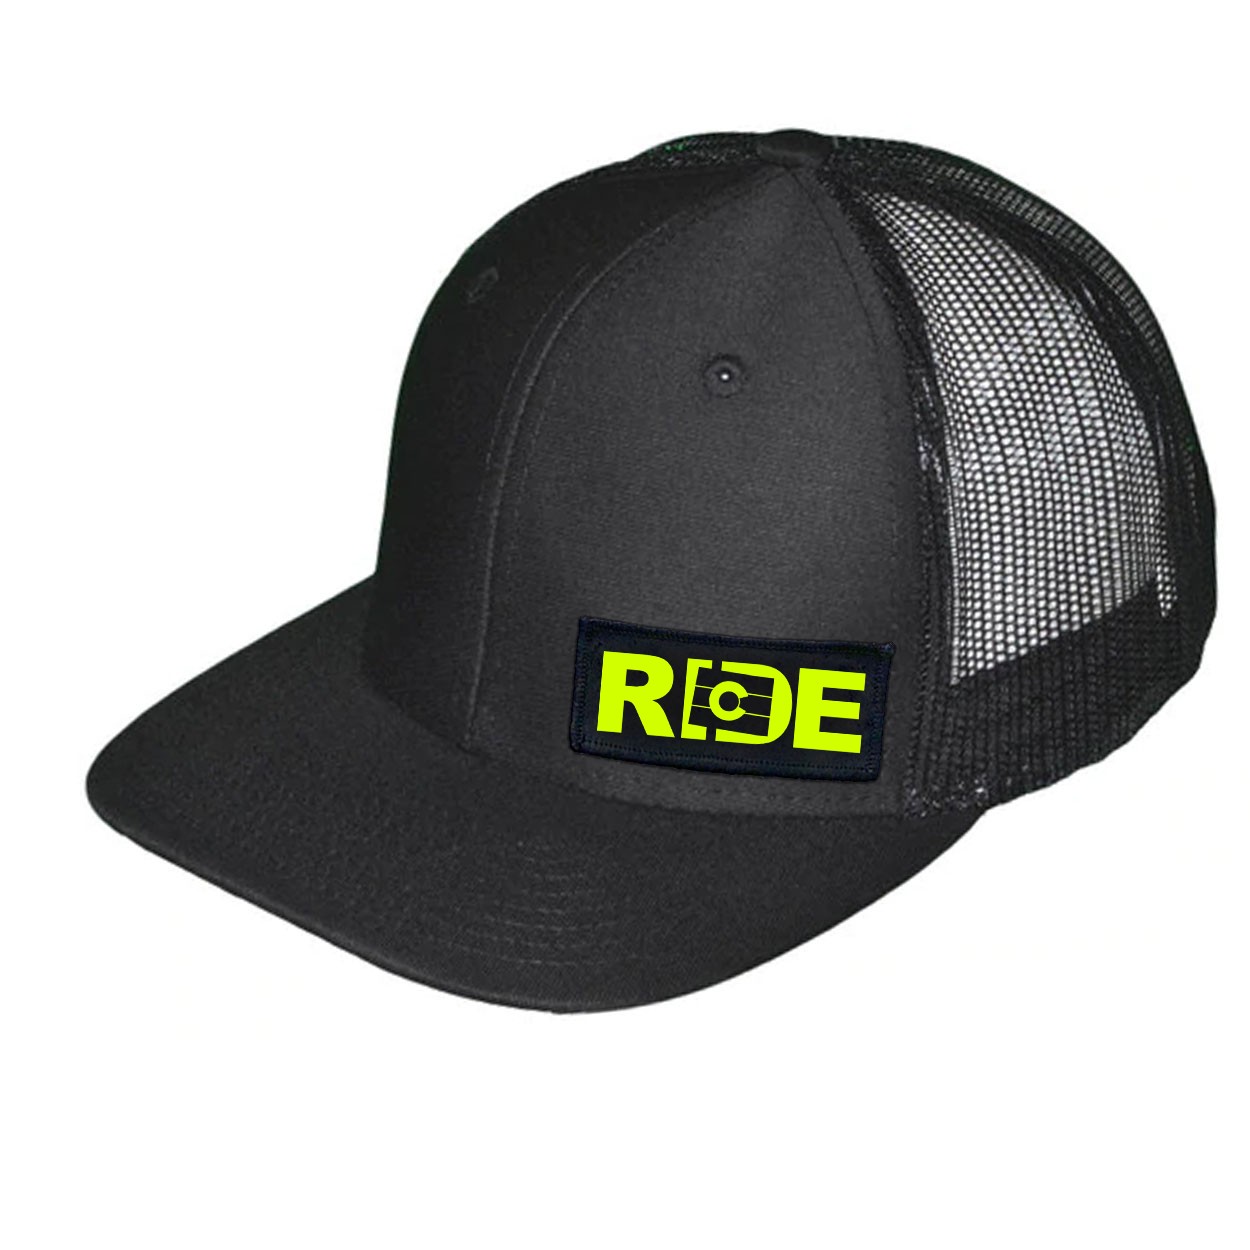 Ride Colorado Night Out Woven Patch Snapback Trucker Hat Black (Hi-Vis Logo)